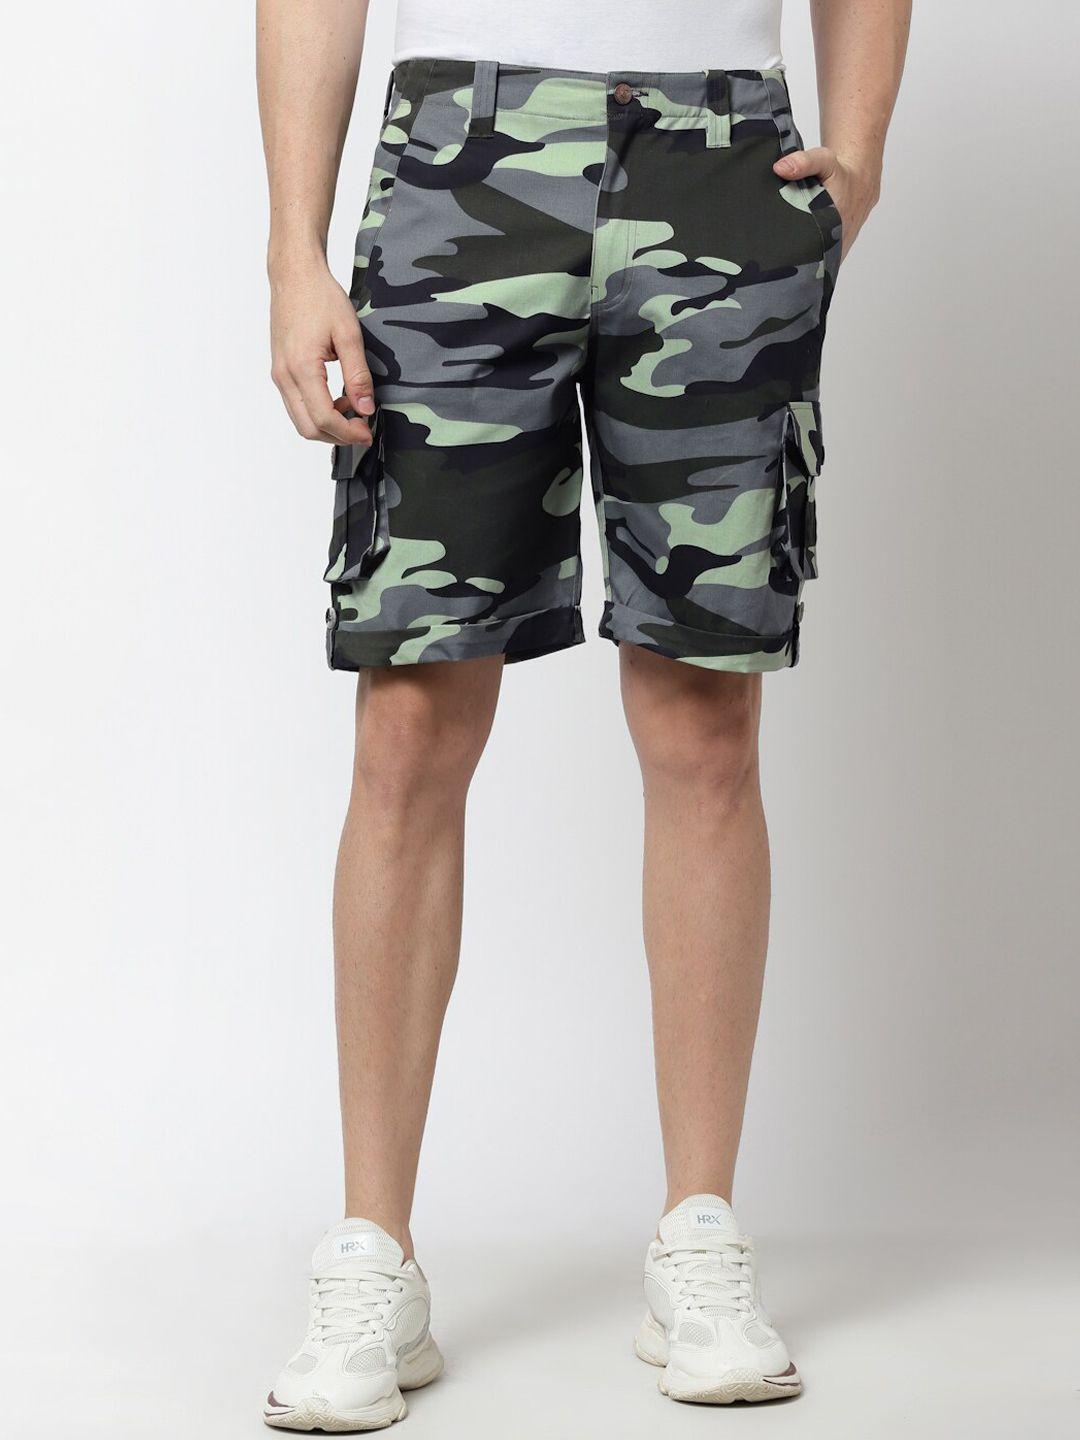 klotthe men camouflage printed mid-rise cotton shorts